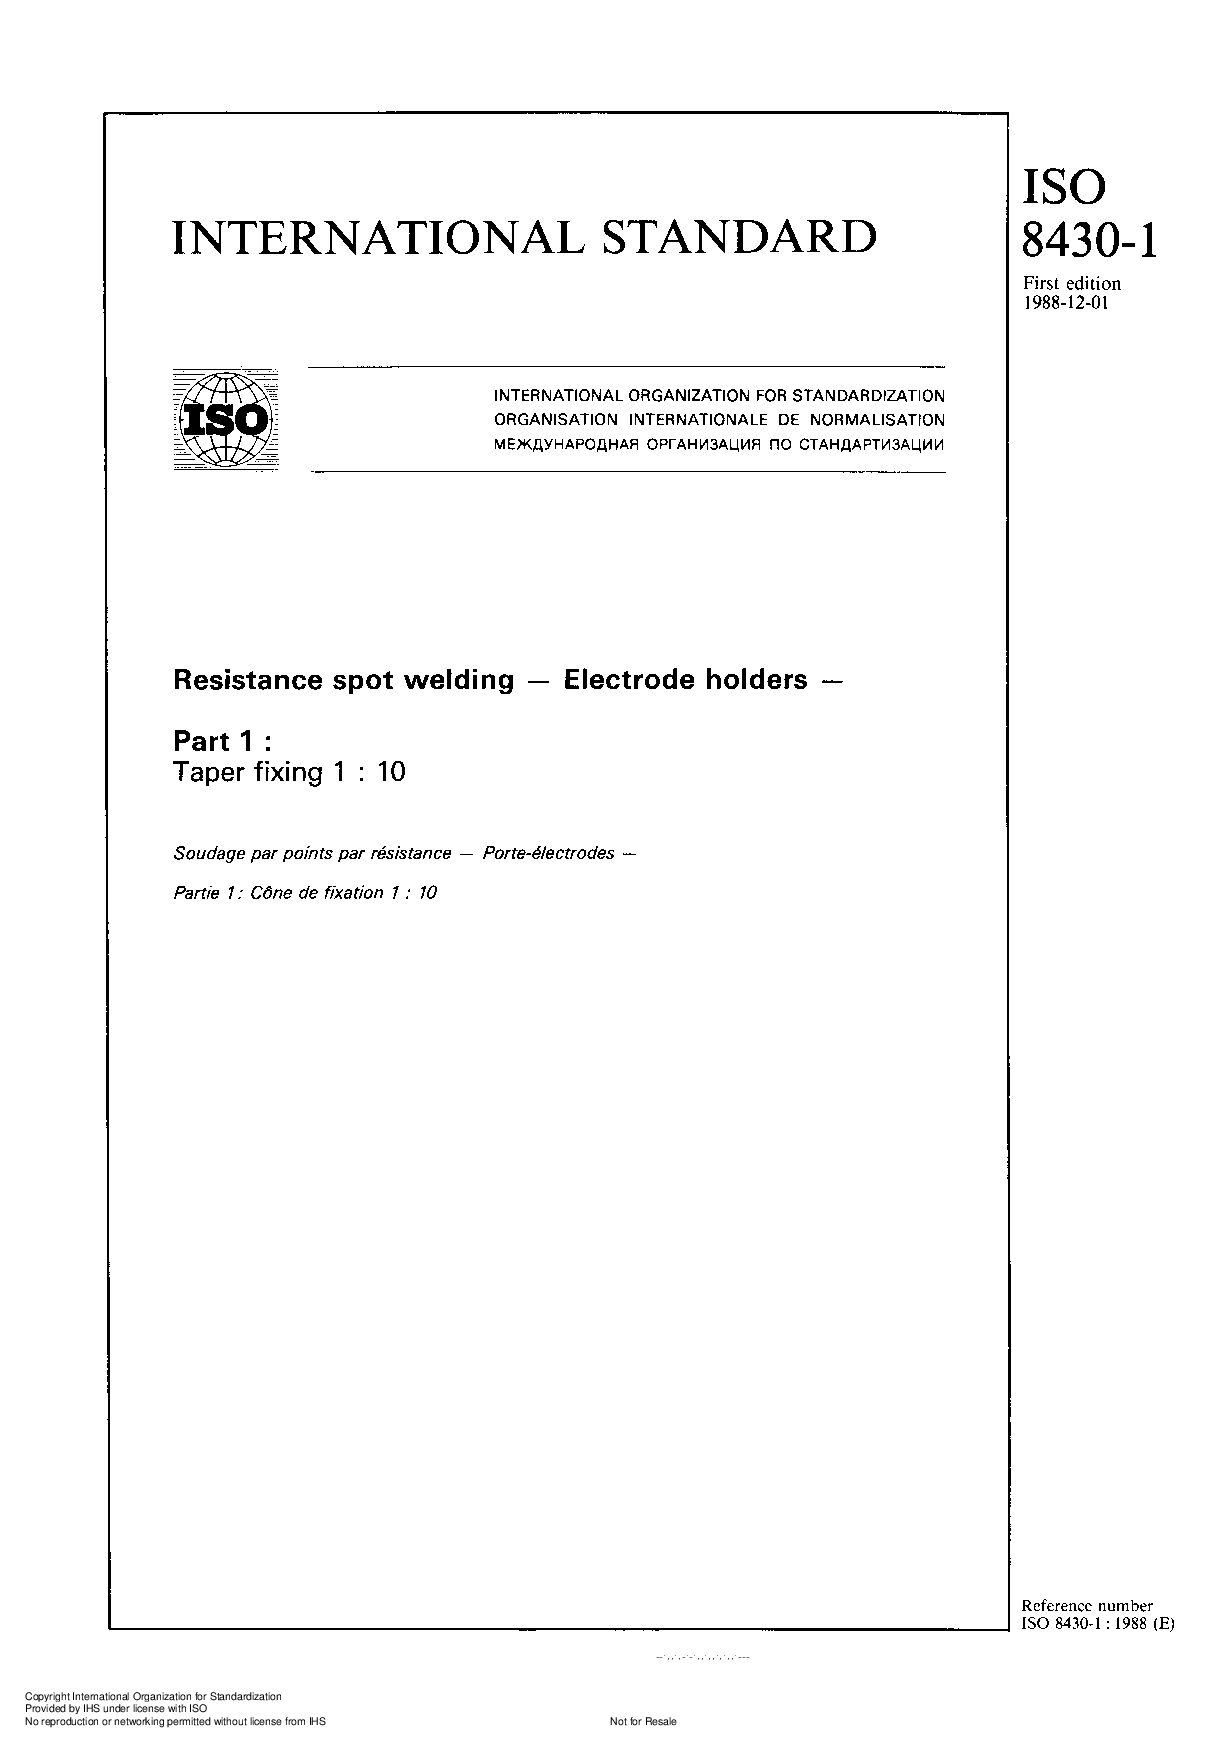 ISO 8430-1:1988封面图